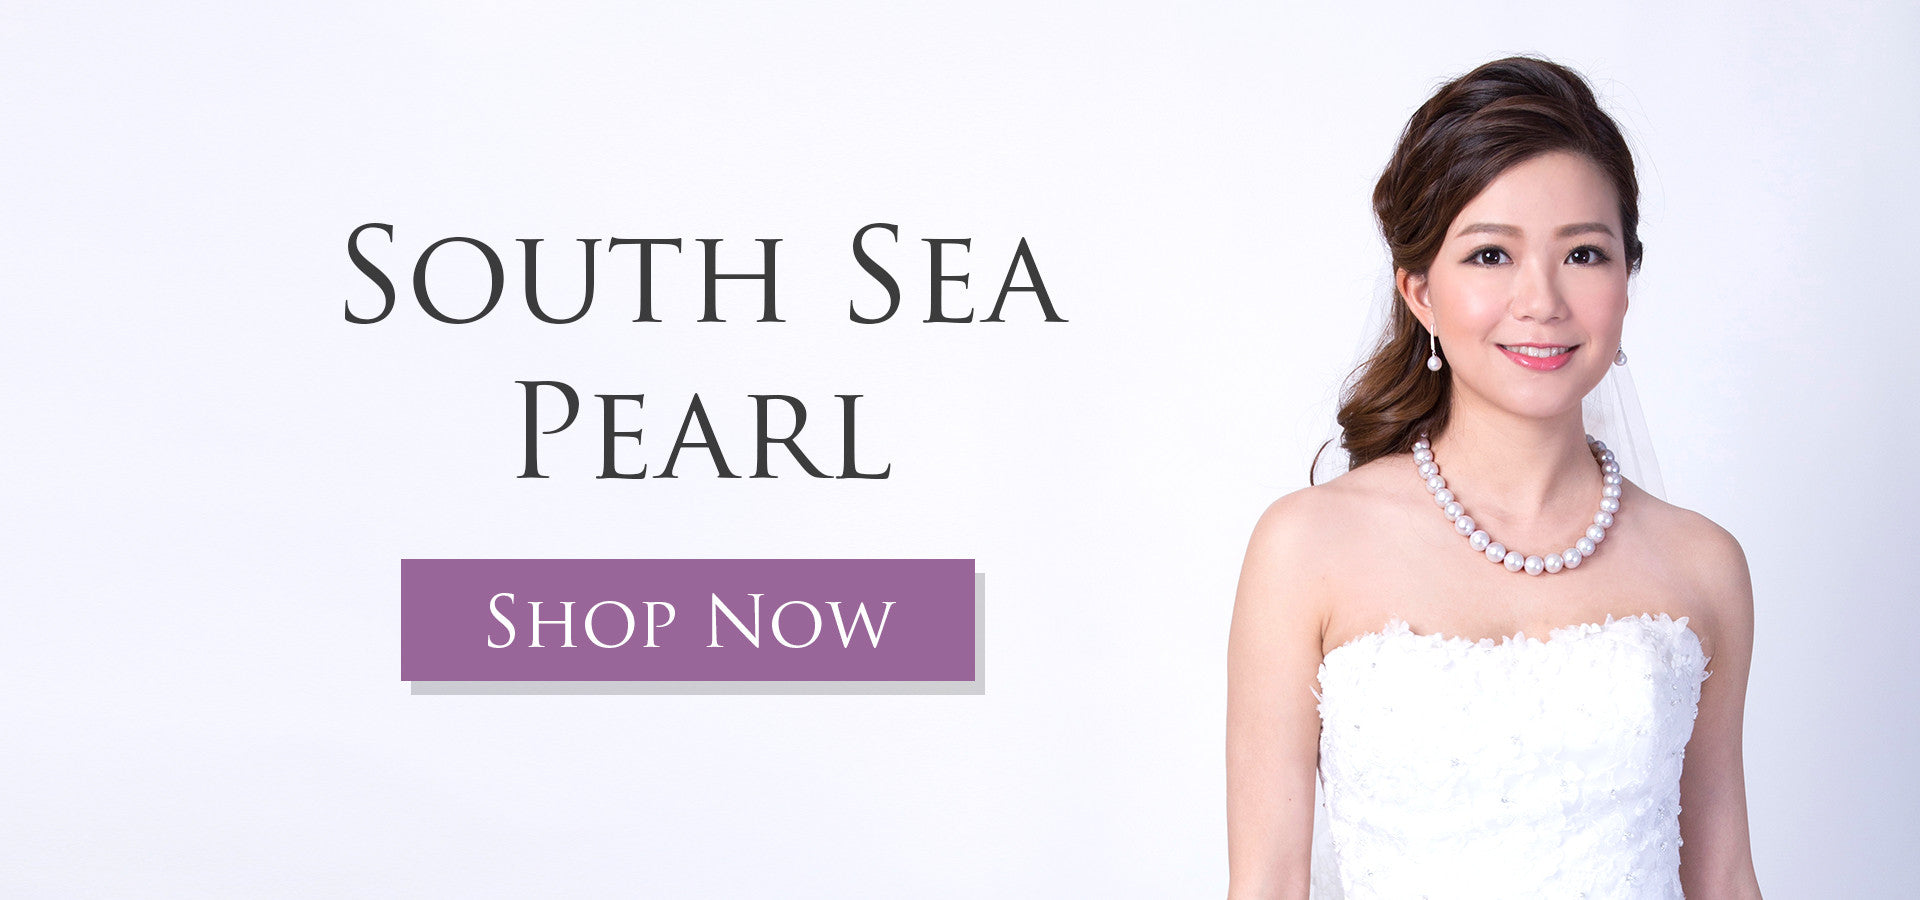 South Sea Pearl Shop